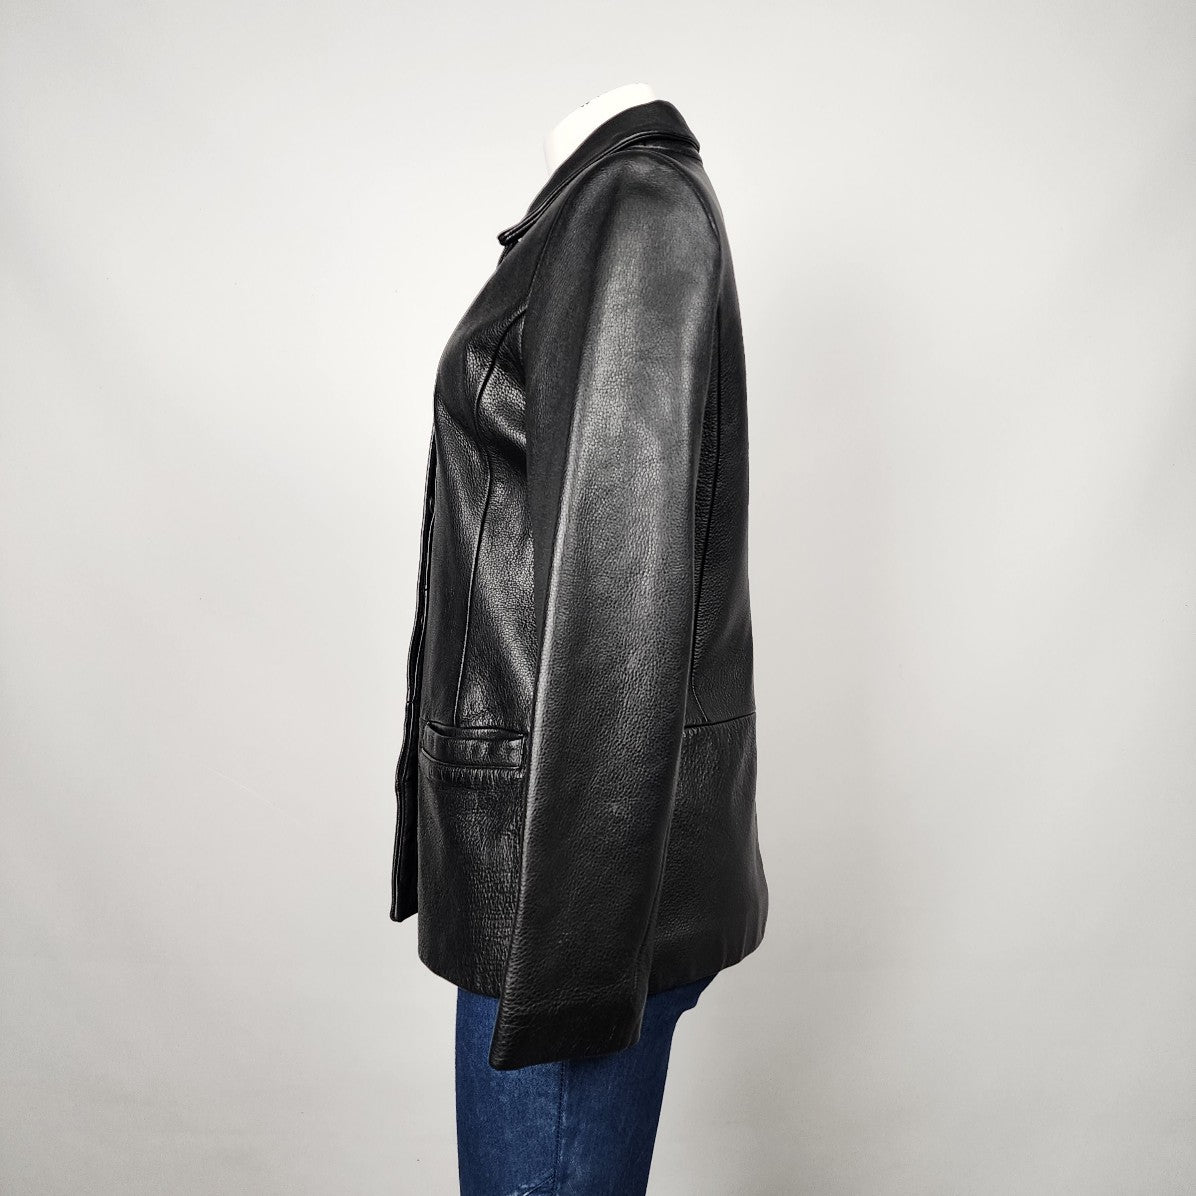 Danier Black Leather Jacket Size XS/S